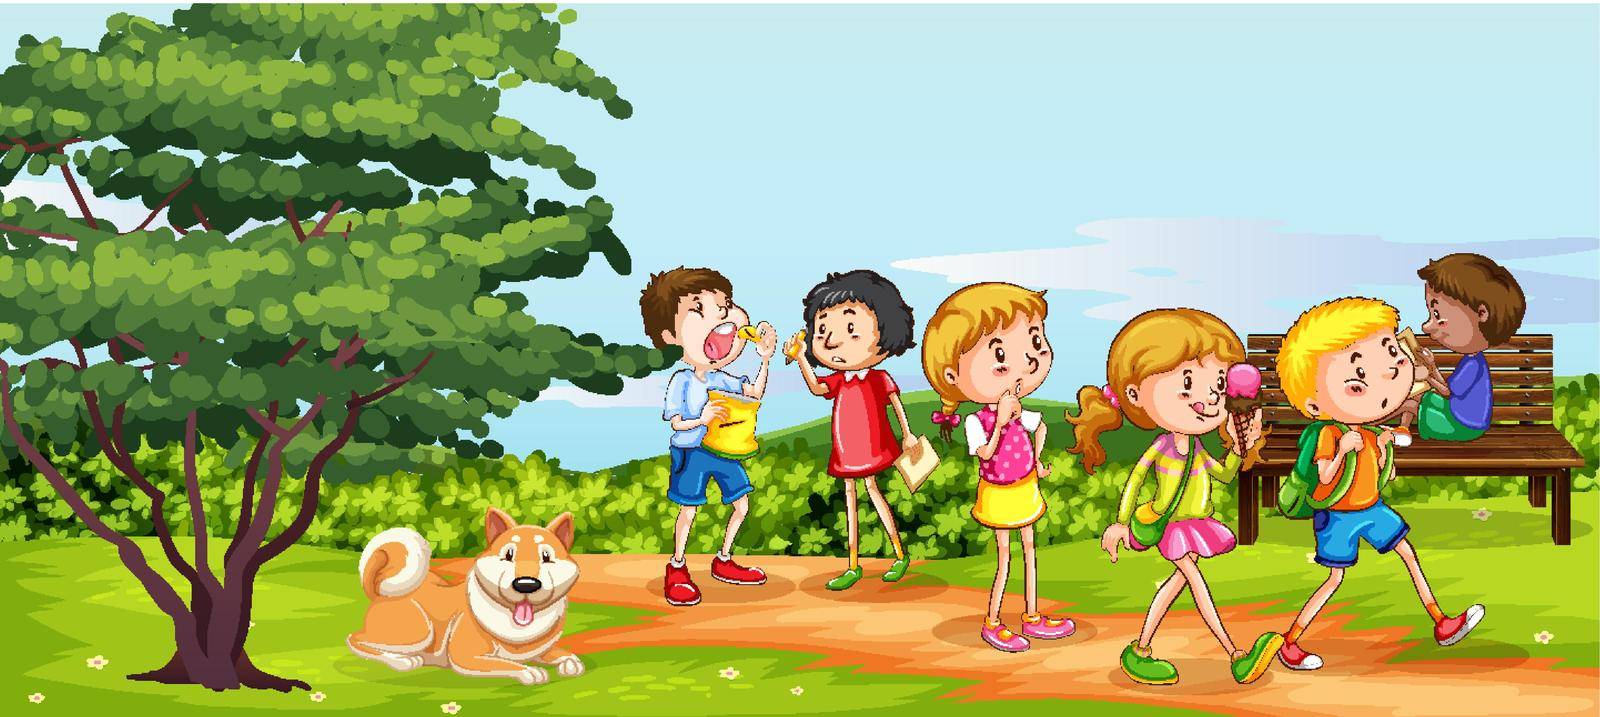 Scene with many children having fun in the park illustration